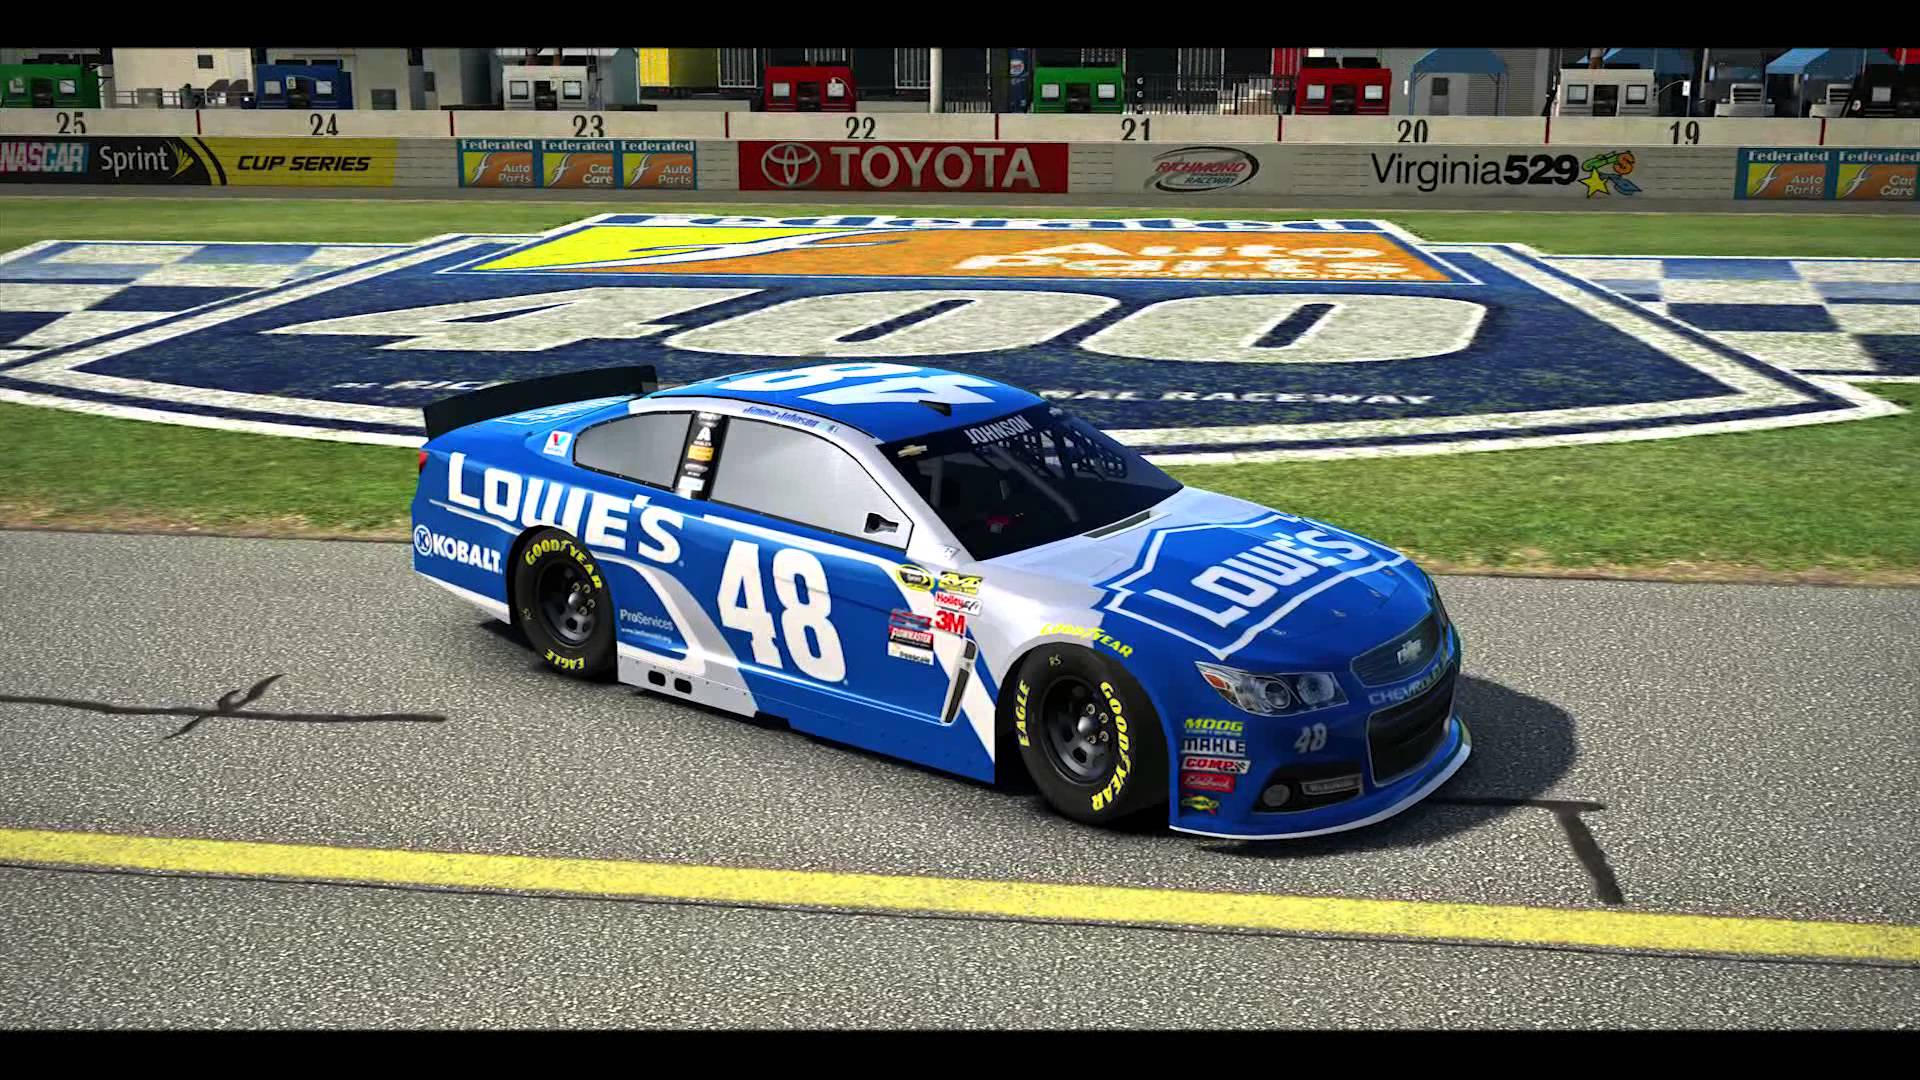 Real Racing 3 - NASCAR Gameplay Trailer - YouTube